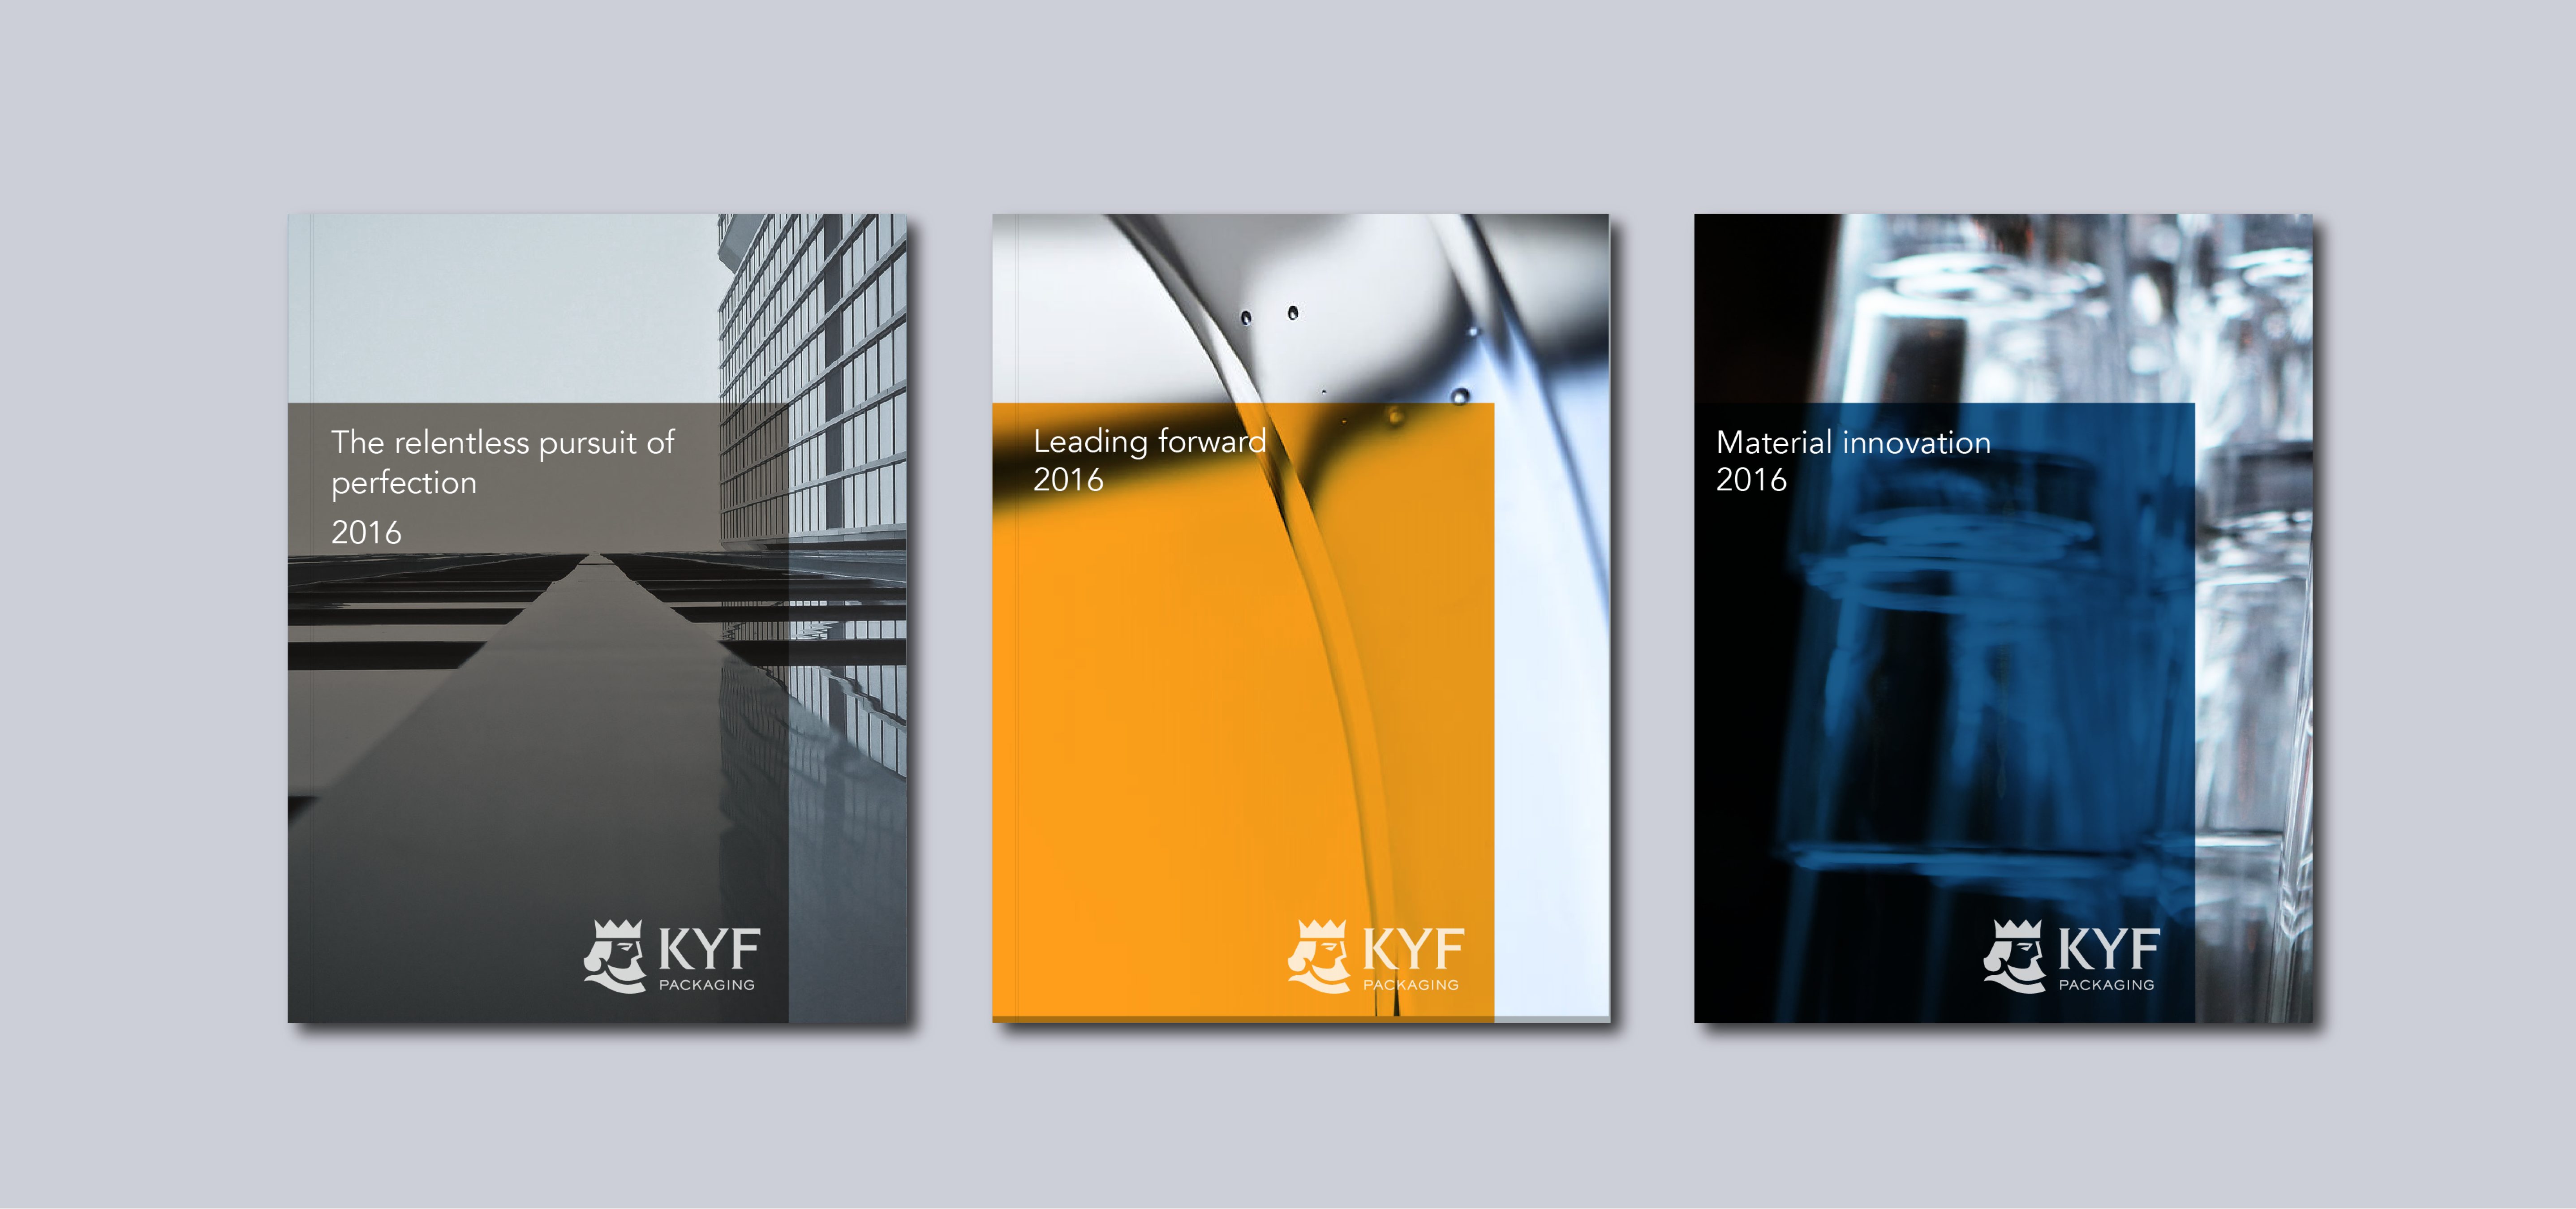 KYF slide03 | 金元福企業識別形象更新專案 | Labsology 法博思品牌顧問公司